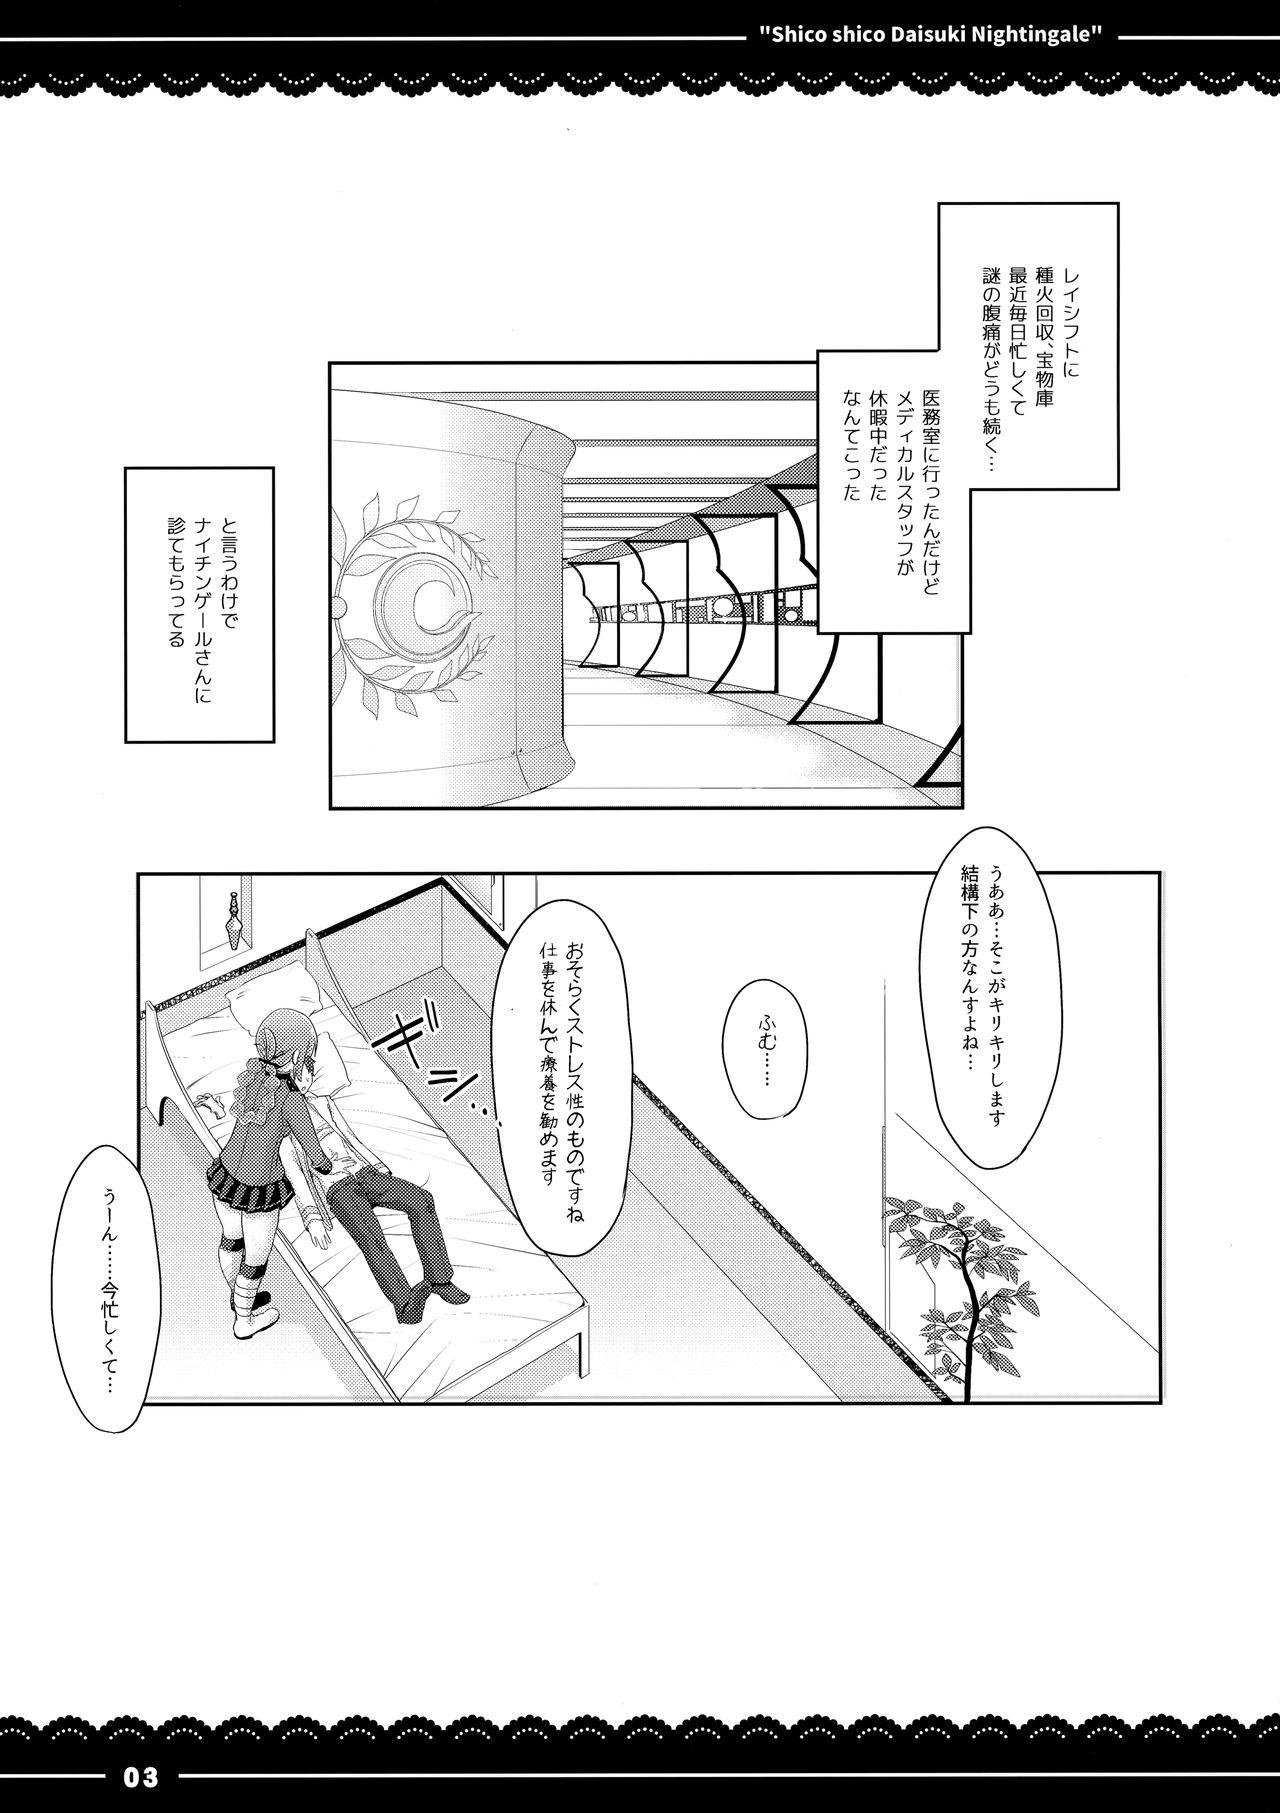 Thick Shikoshiko Daisuki Nightingale + Kaijou Gentei Omakebon - Fate grand order Para - Page 4